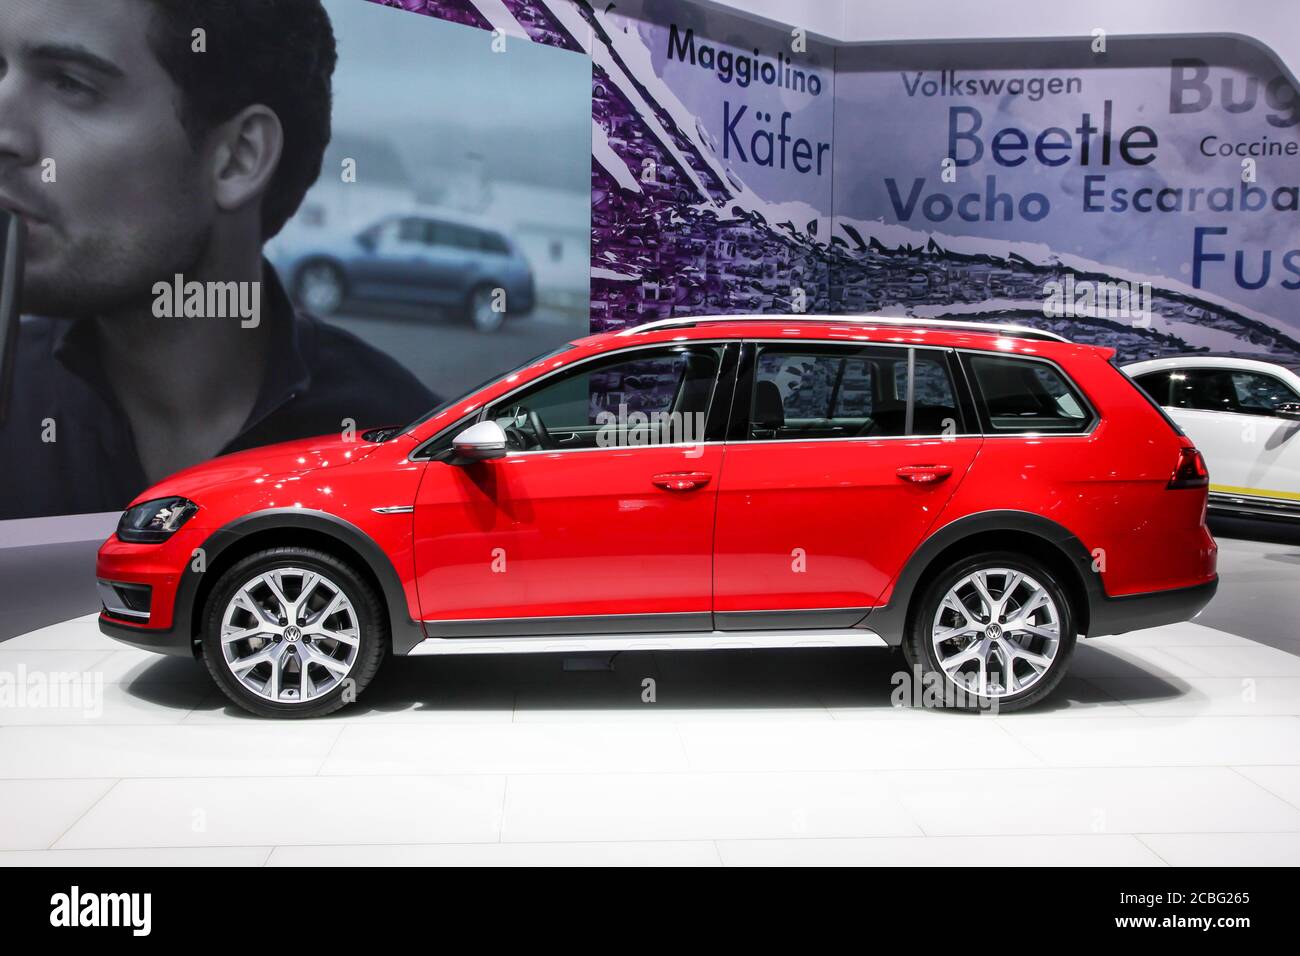 Volkswagen exhibit Volkswagen Golf Sport wagen alltrack at the 2015 New York International Auto Show. Stock Photo